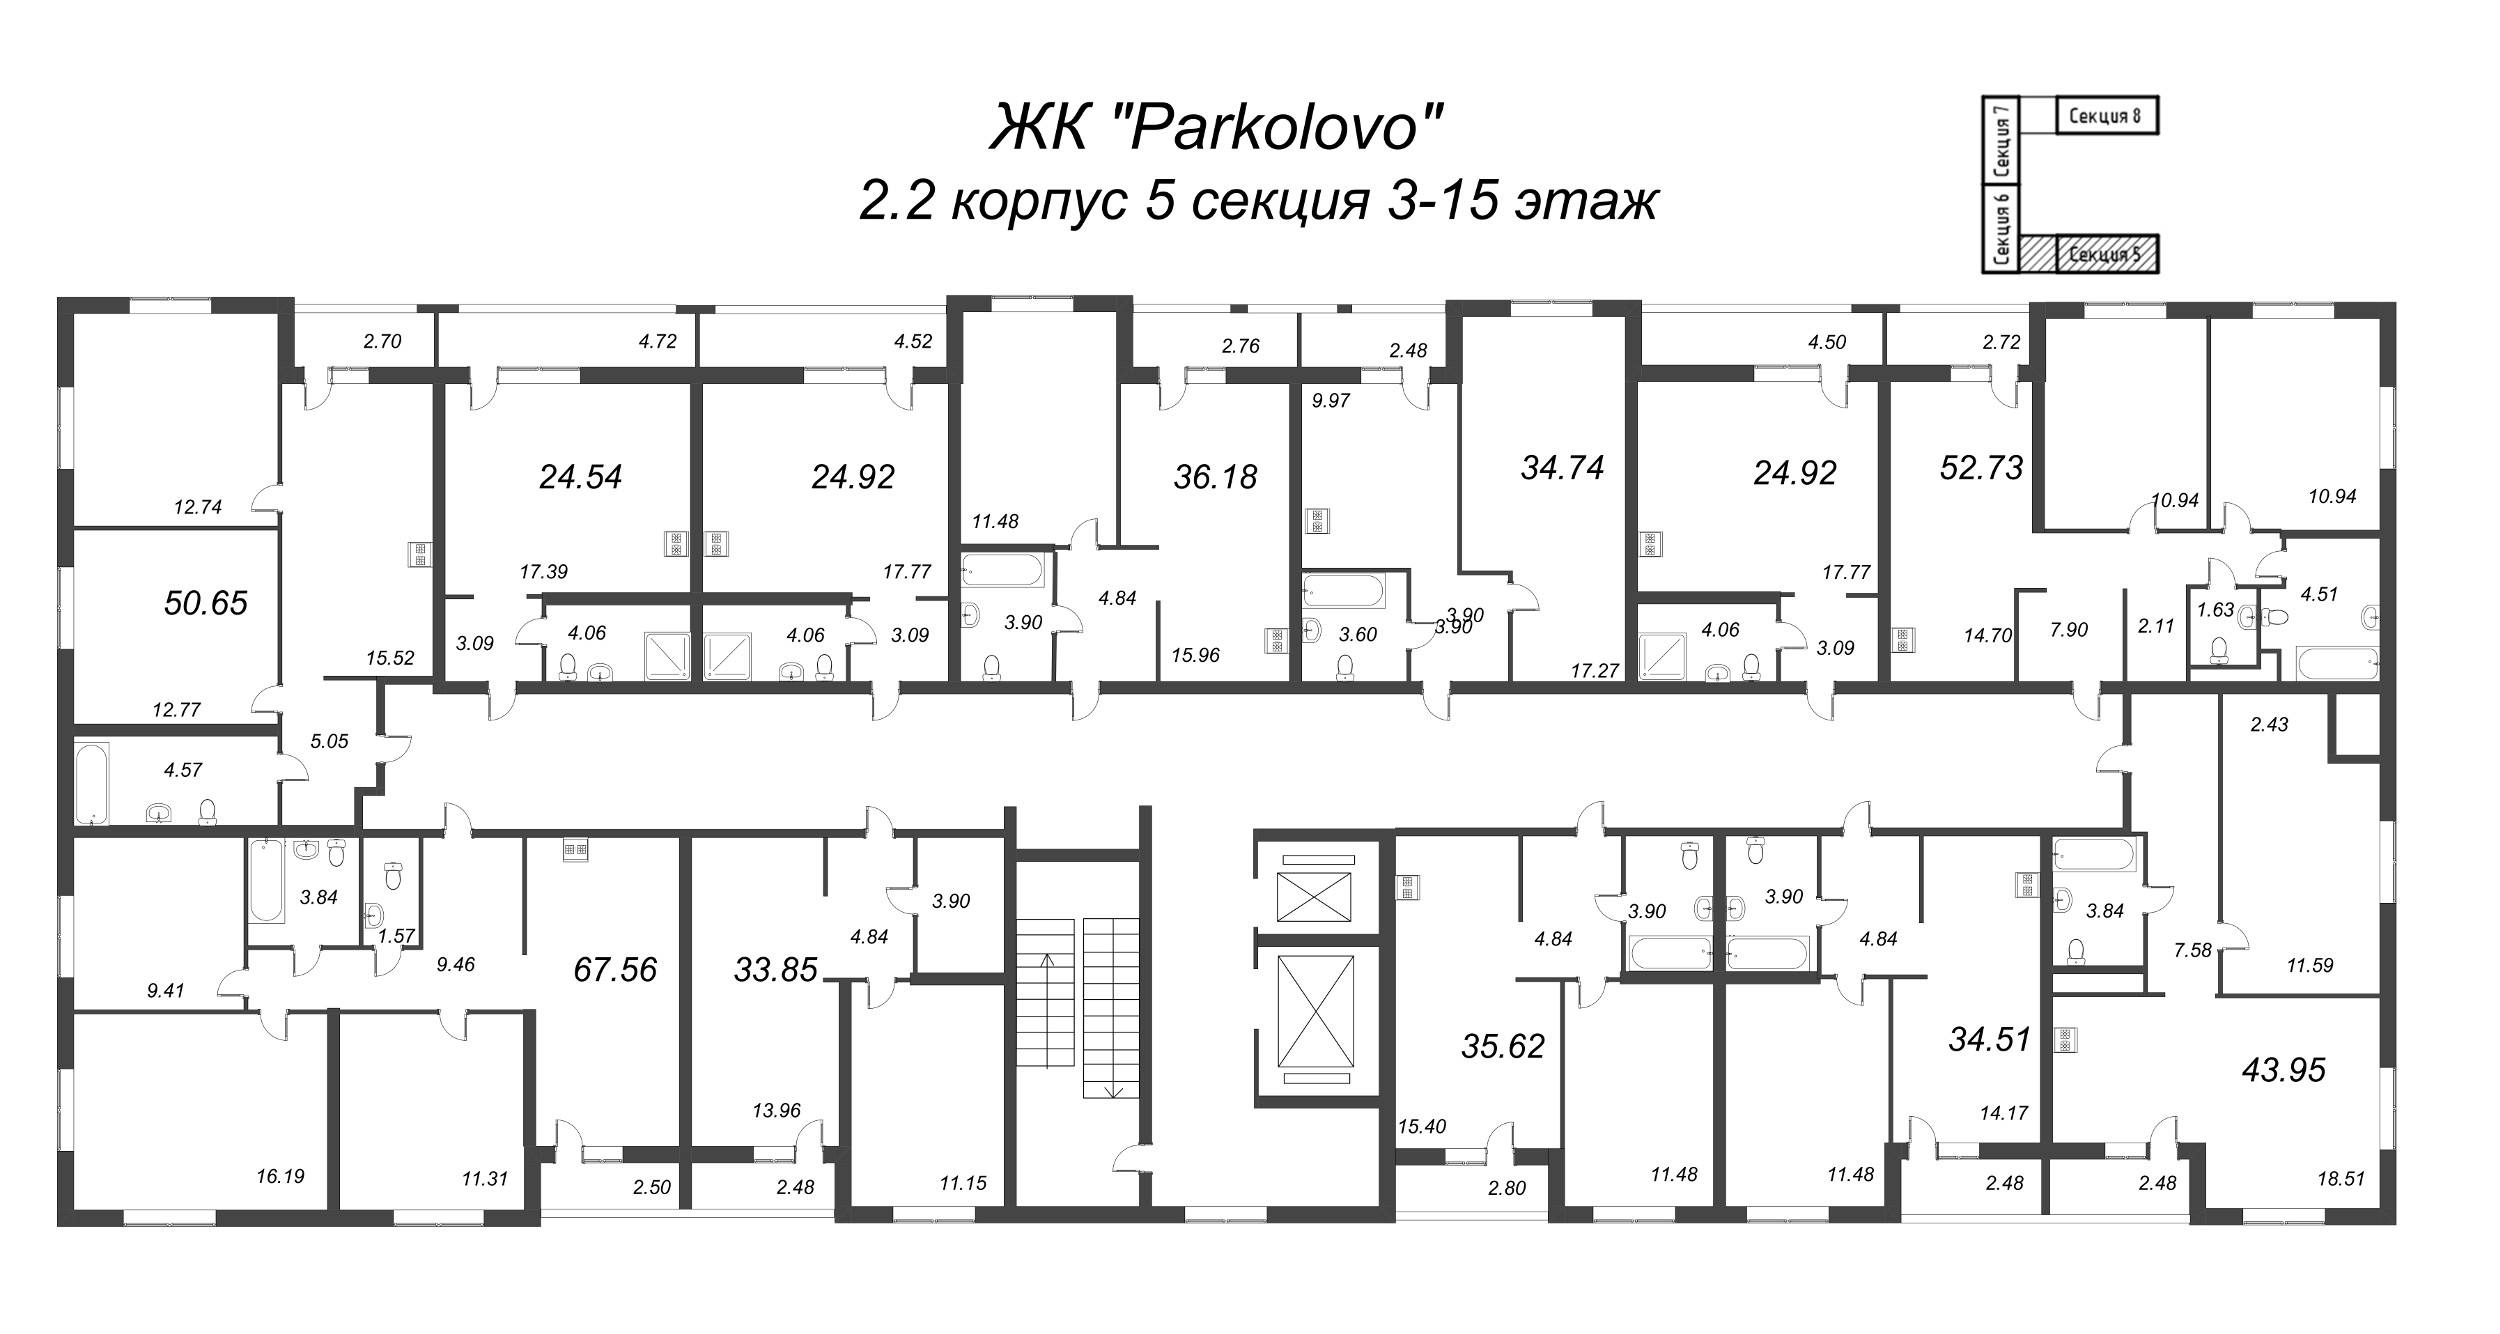 4-комнатная (Евро) квартира, 64.8 м² - планировка этажа